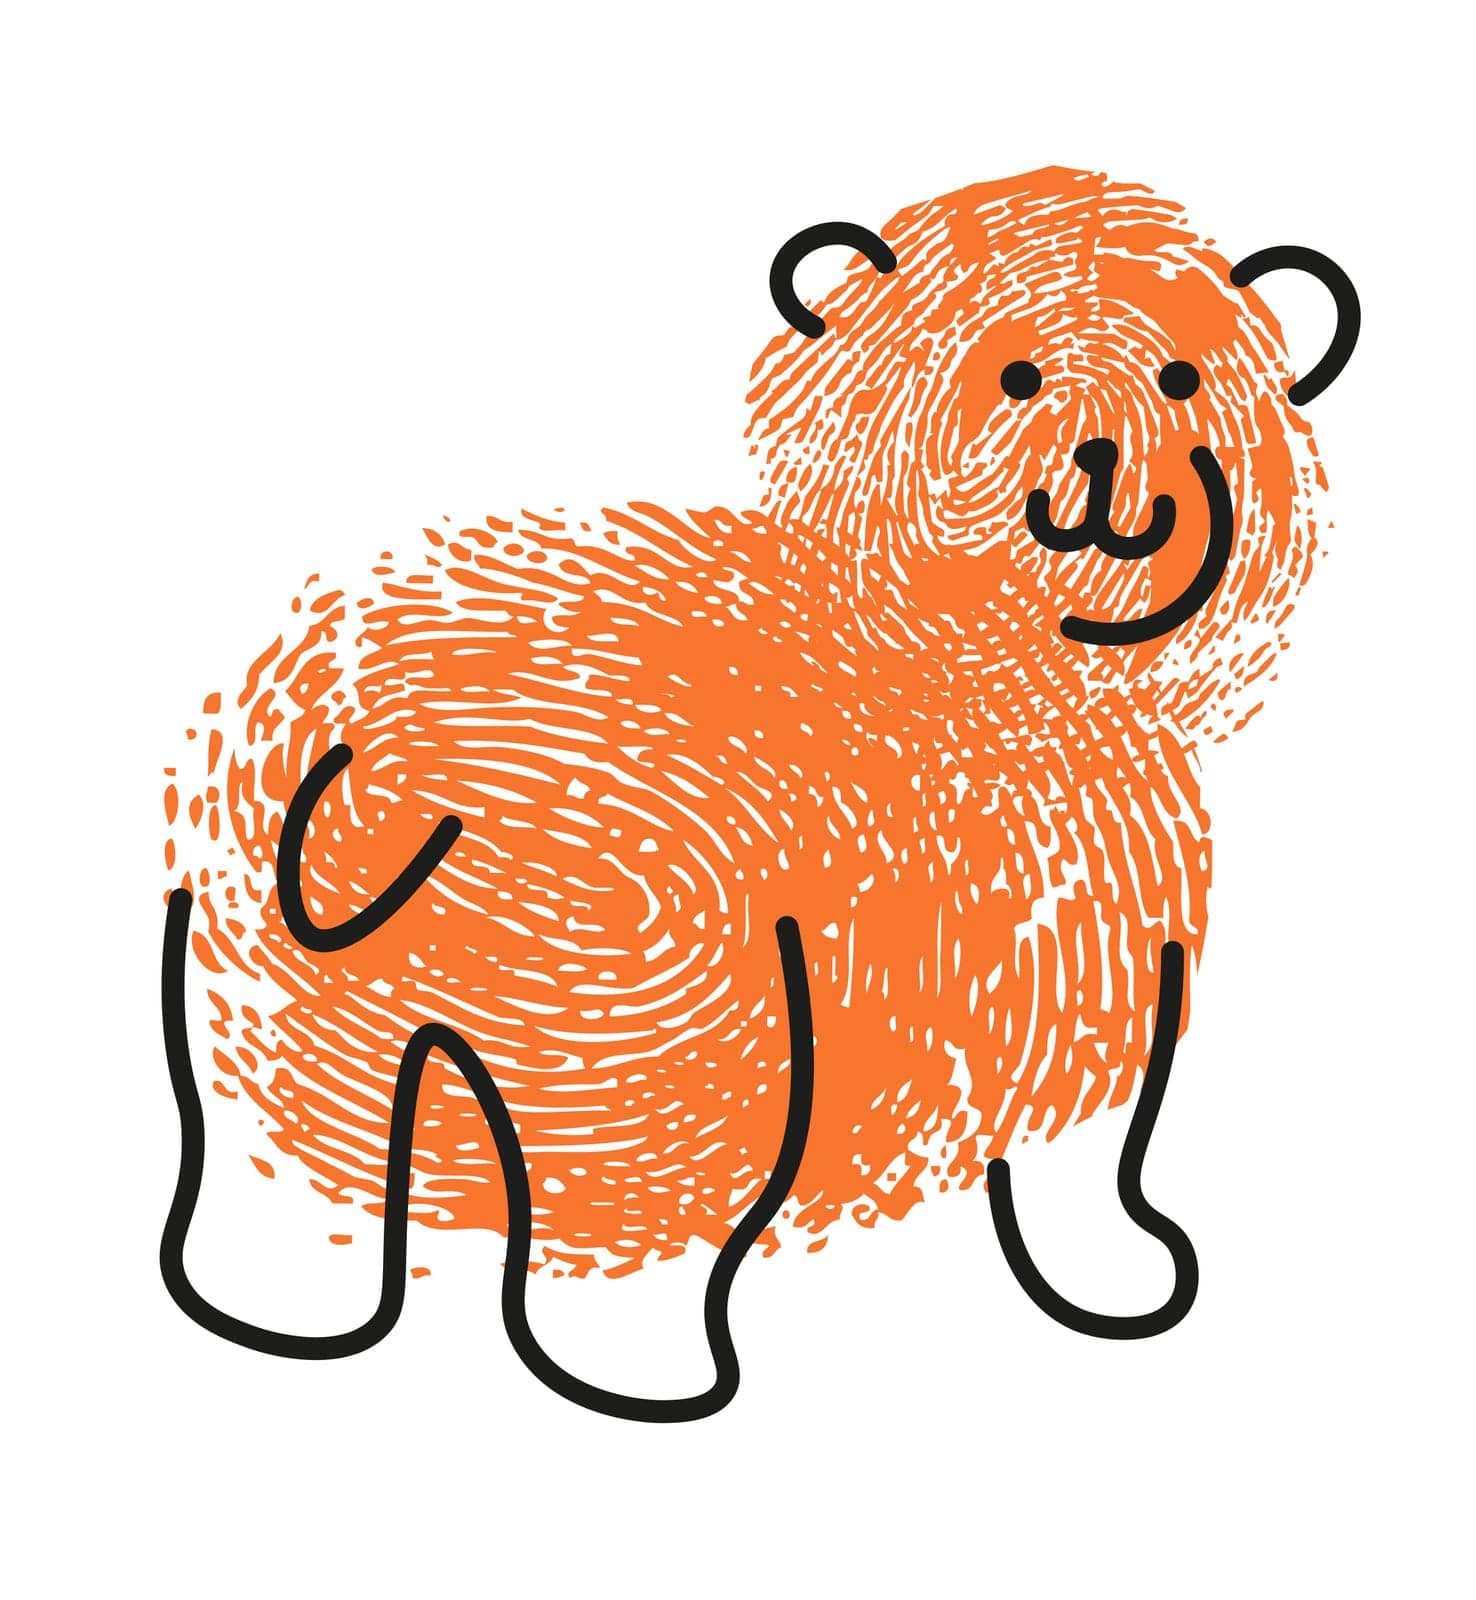 Thumbprint drawing of bear, mammal animal portrait by Sonulkaster